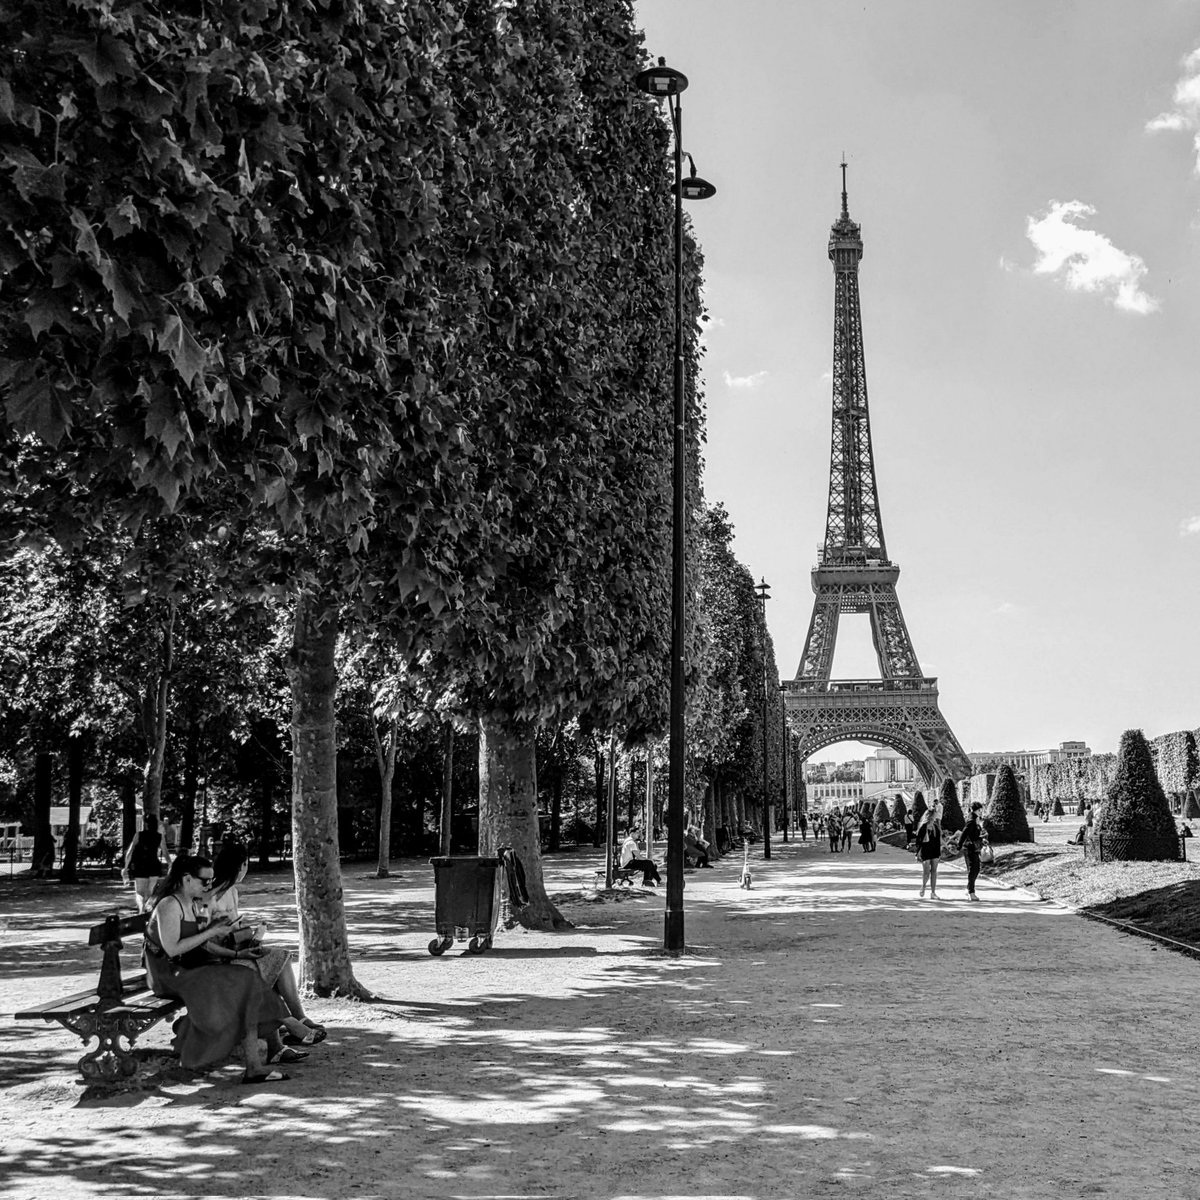 Bonjour !☀️
By me. #blackandwhitephotography #ChampsdeMars #EiffelTower #Paris